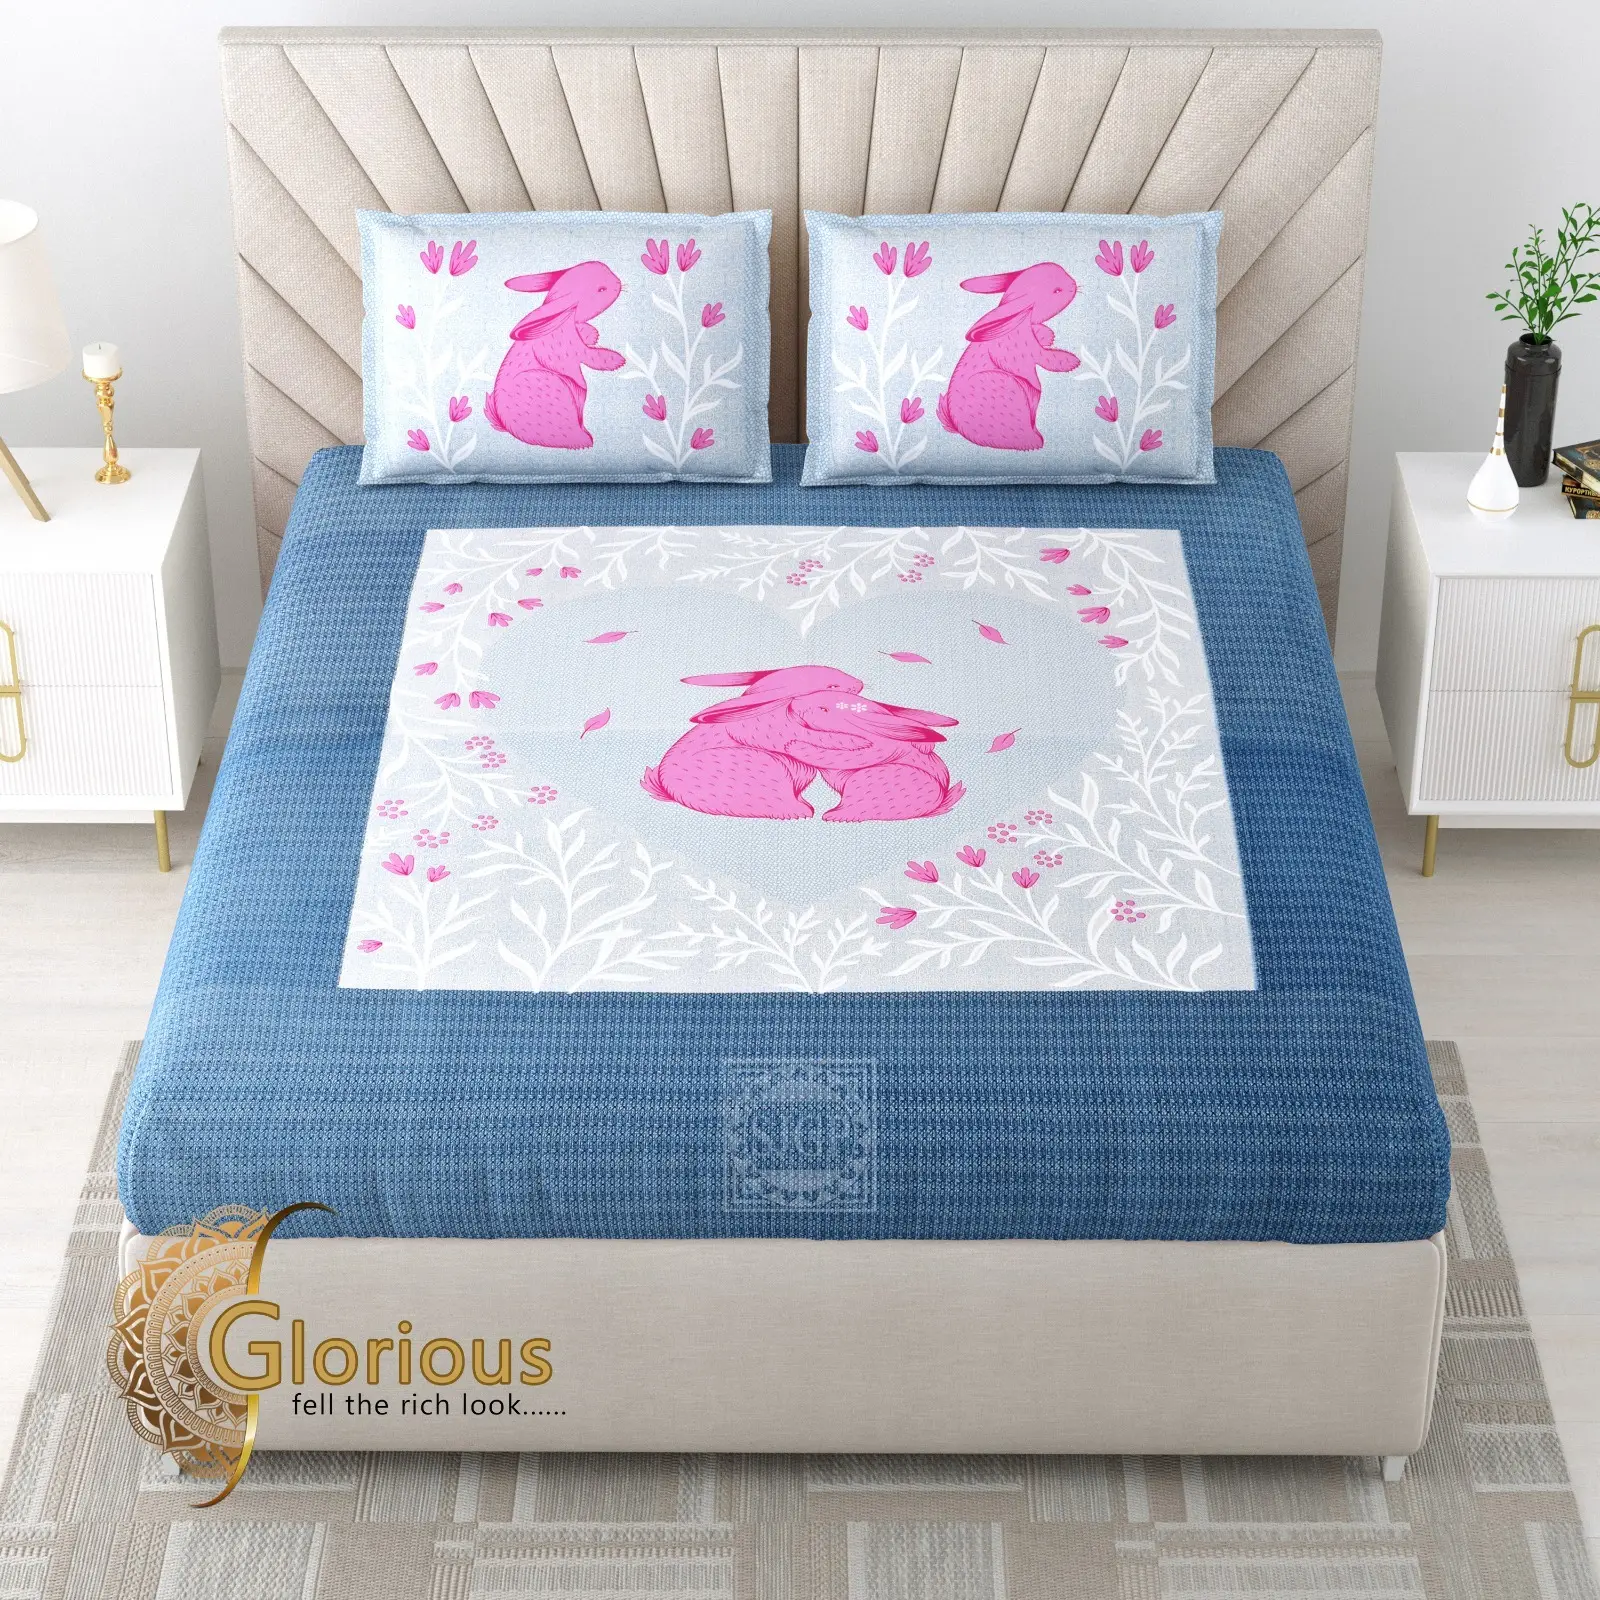 Best quality Cotton 100% king size bedsheet hot sale bedding set including pillowcase flat sheet bedding double bedsheet